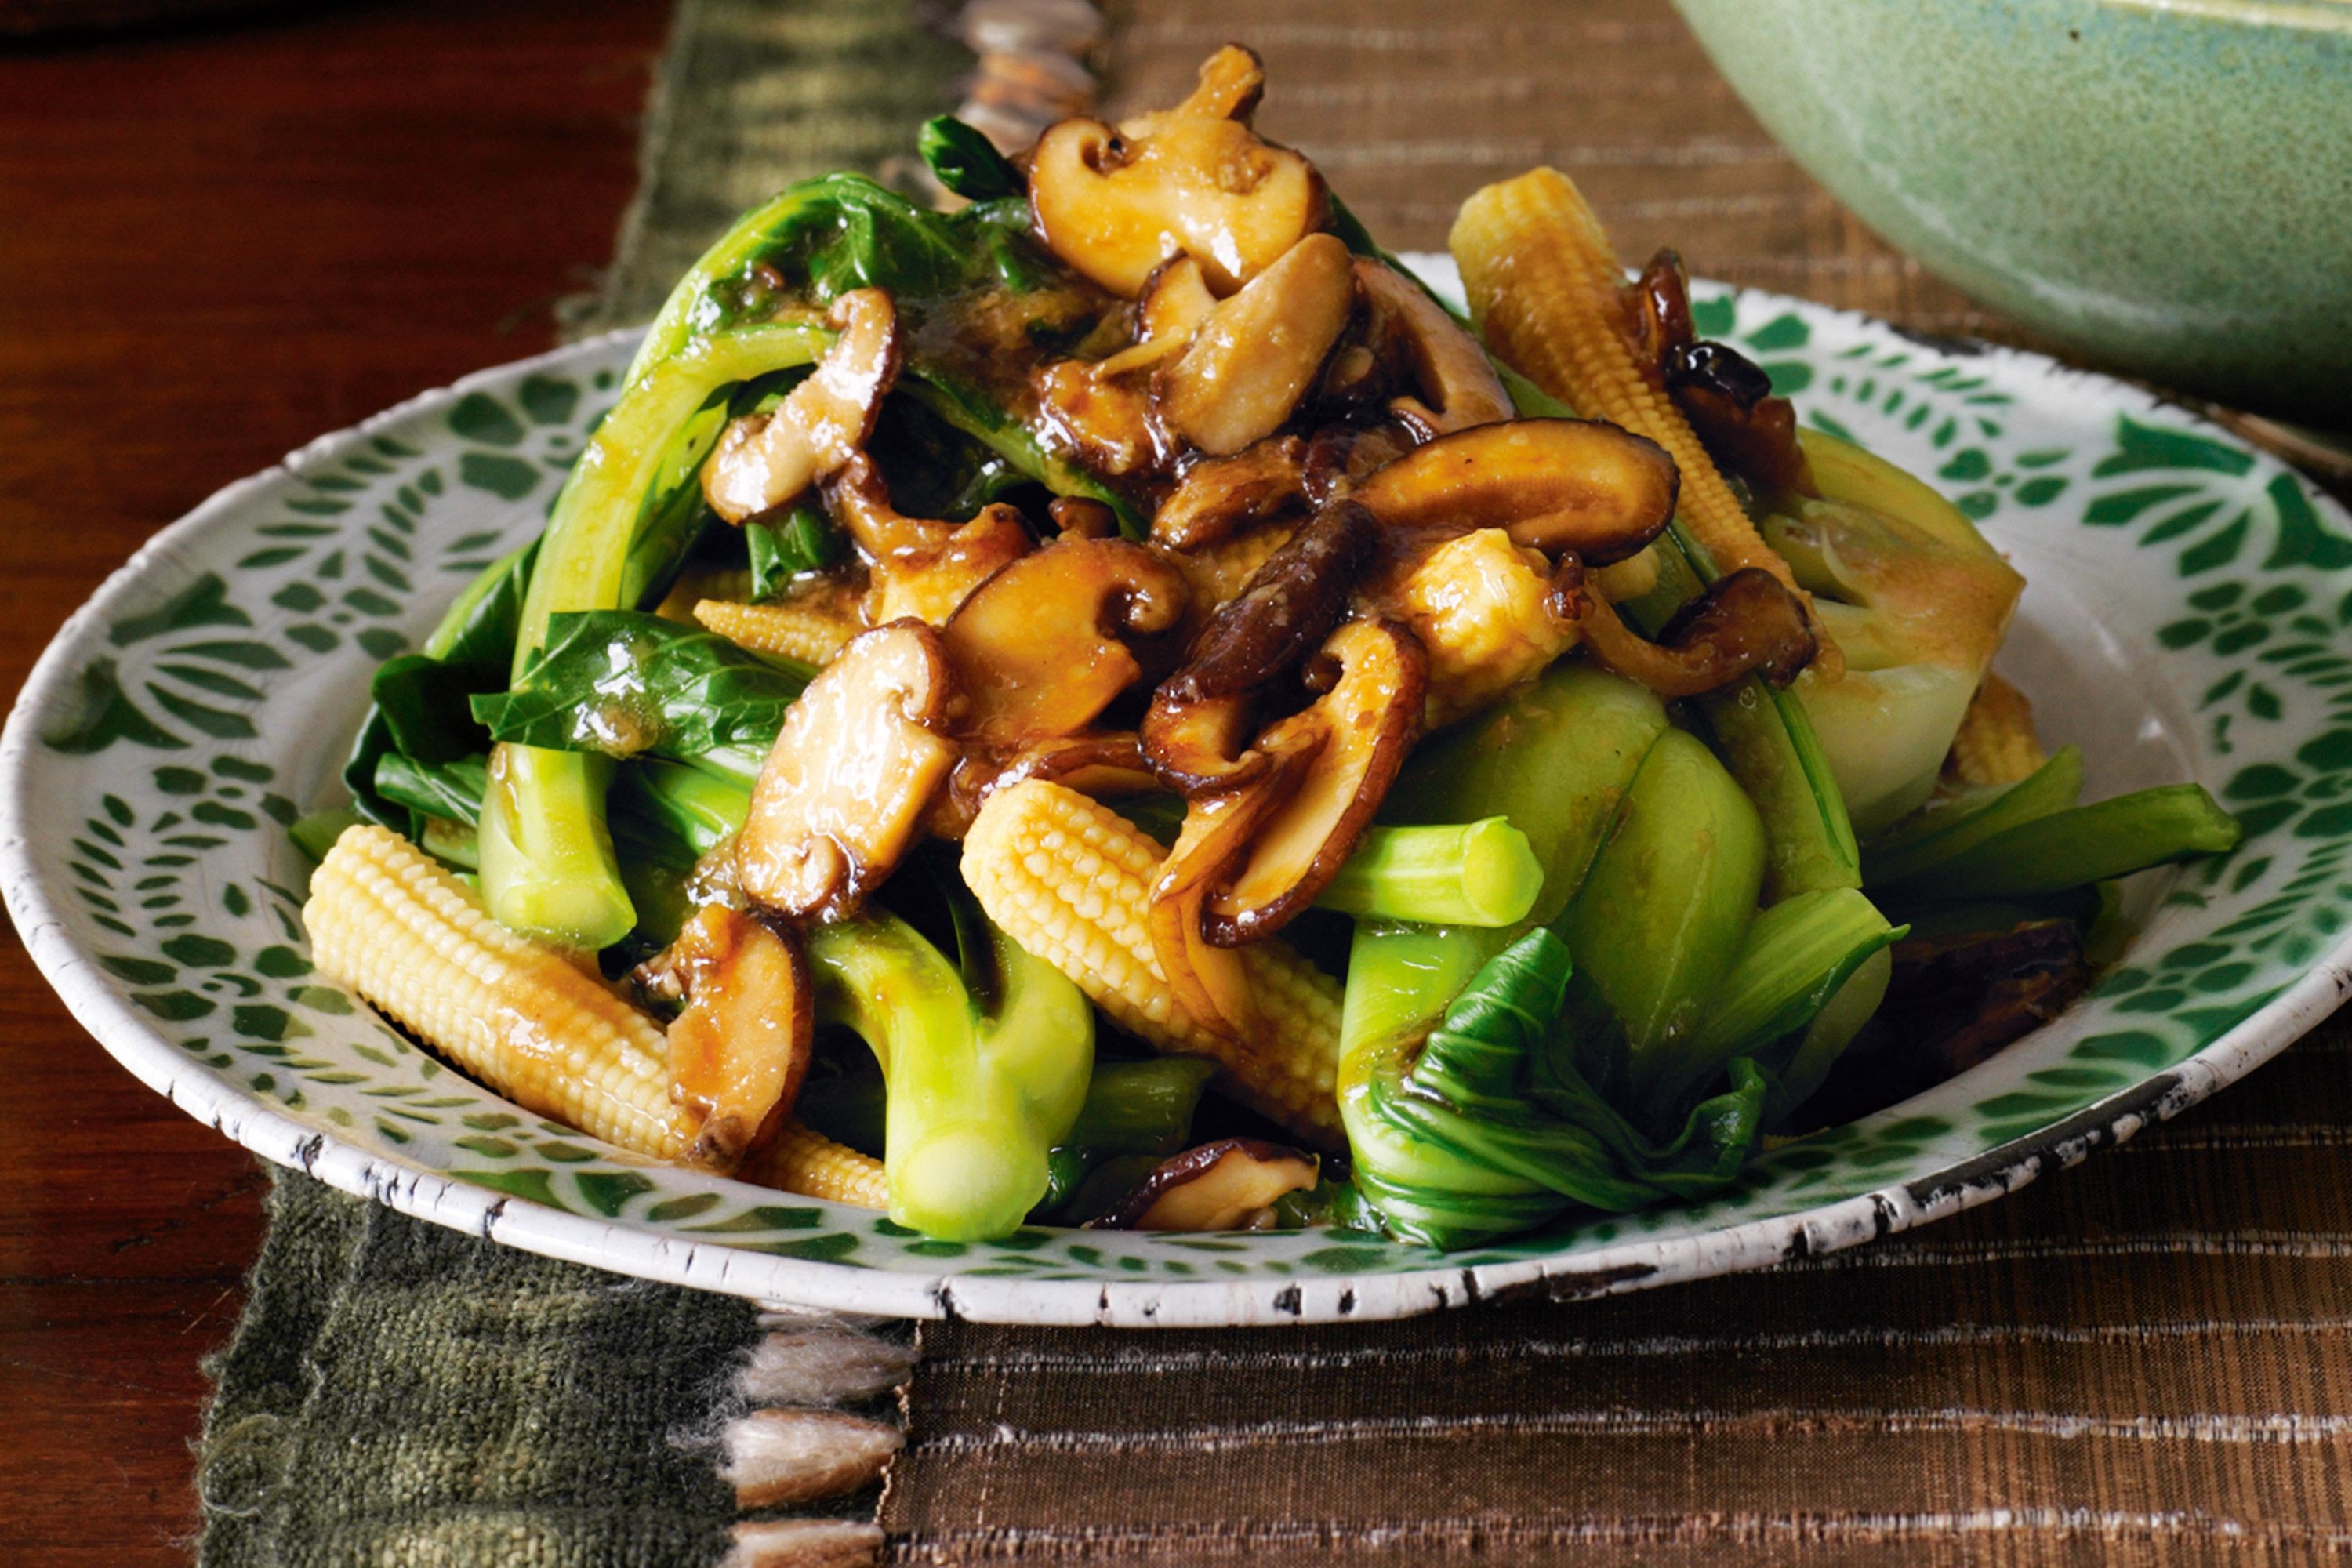 Kennett's Shiitake Mushrooms mixed with Asian Greens – Kennett Mushrooms